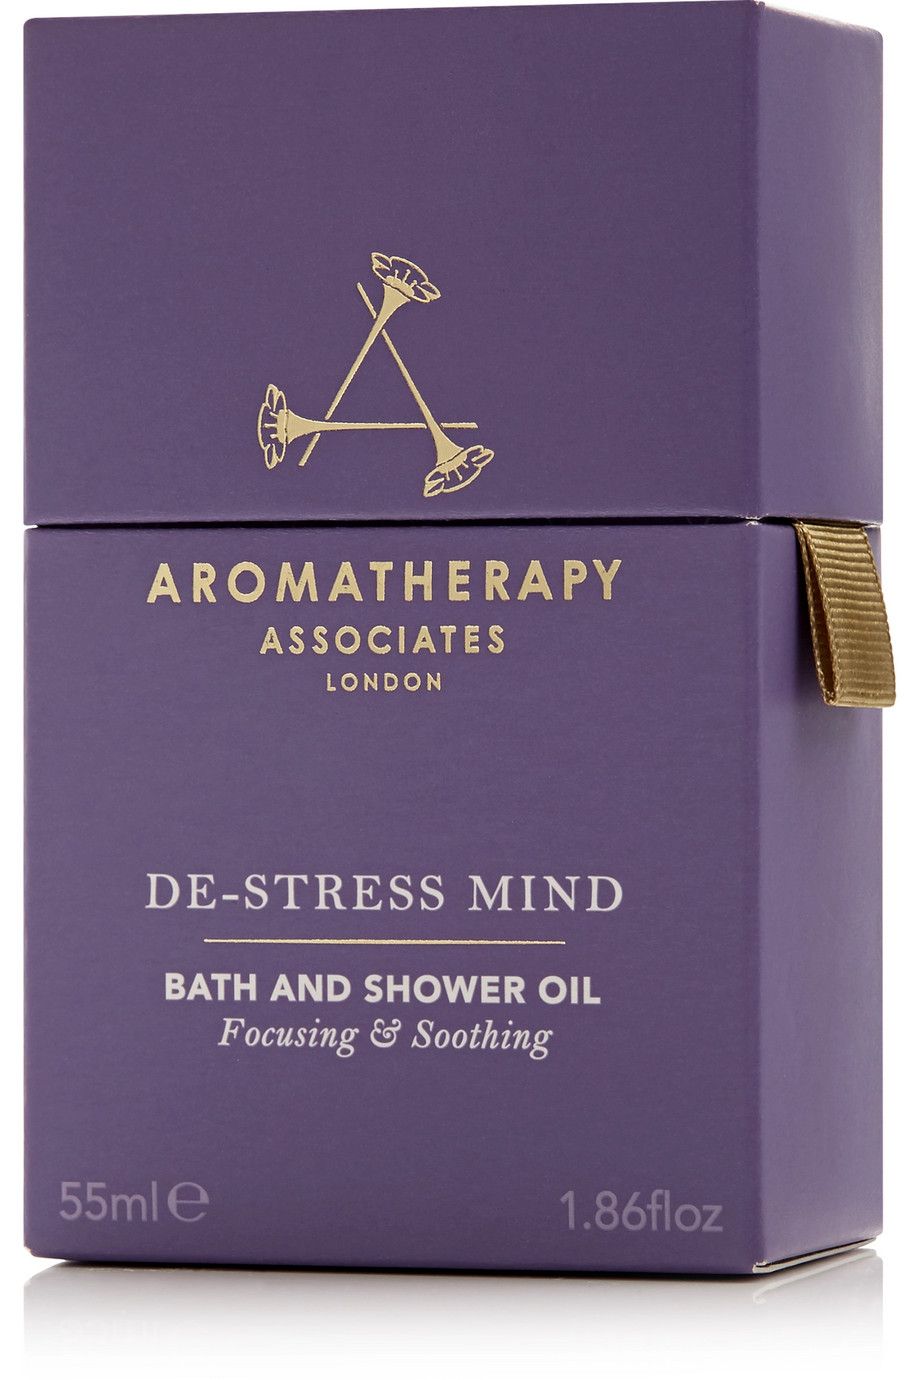 De-Stress Mind Bath and Shower Oil 